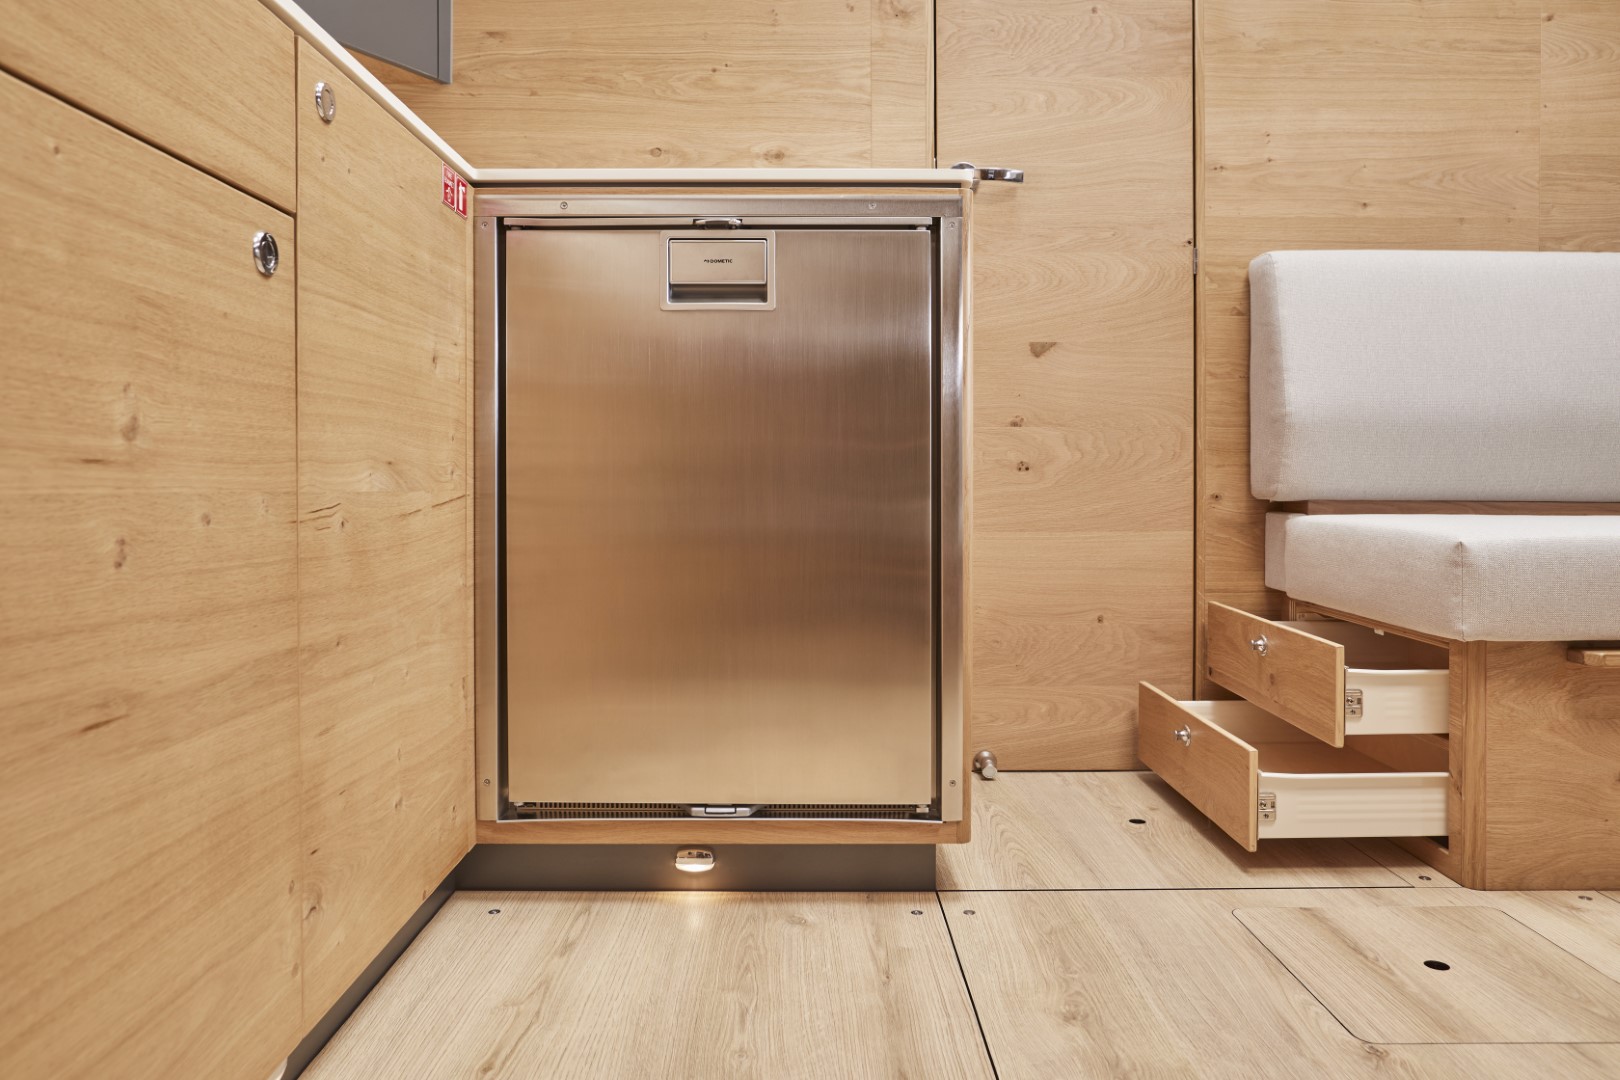 Elan Impression 43 - front opening fridge and drawers